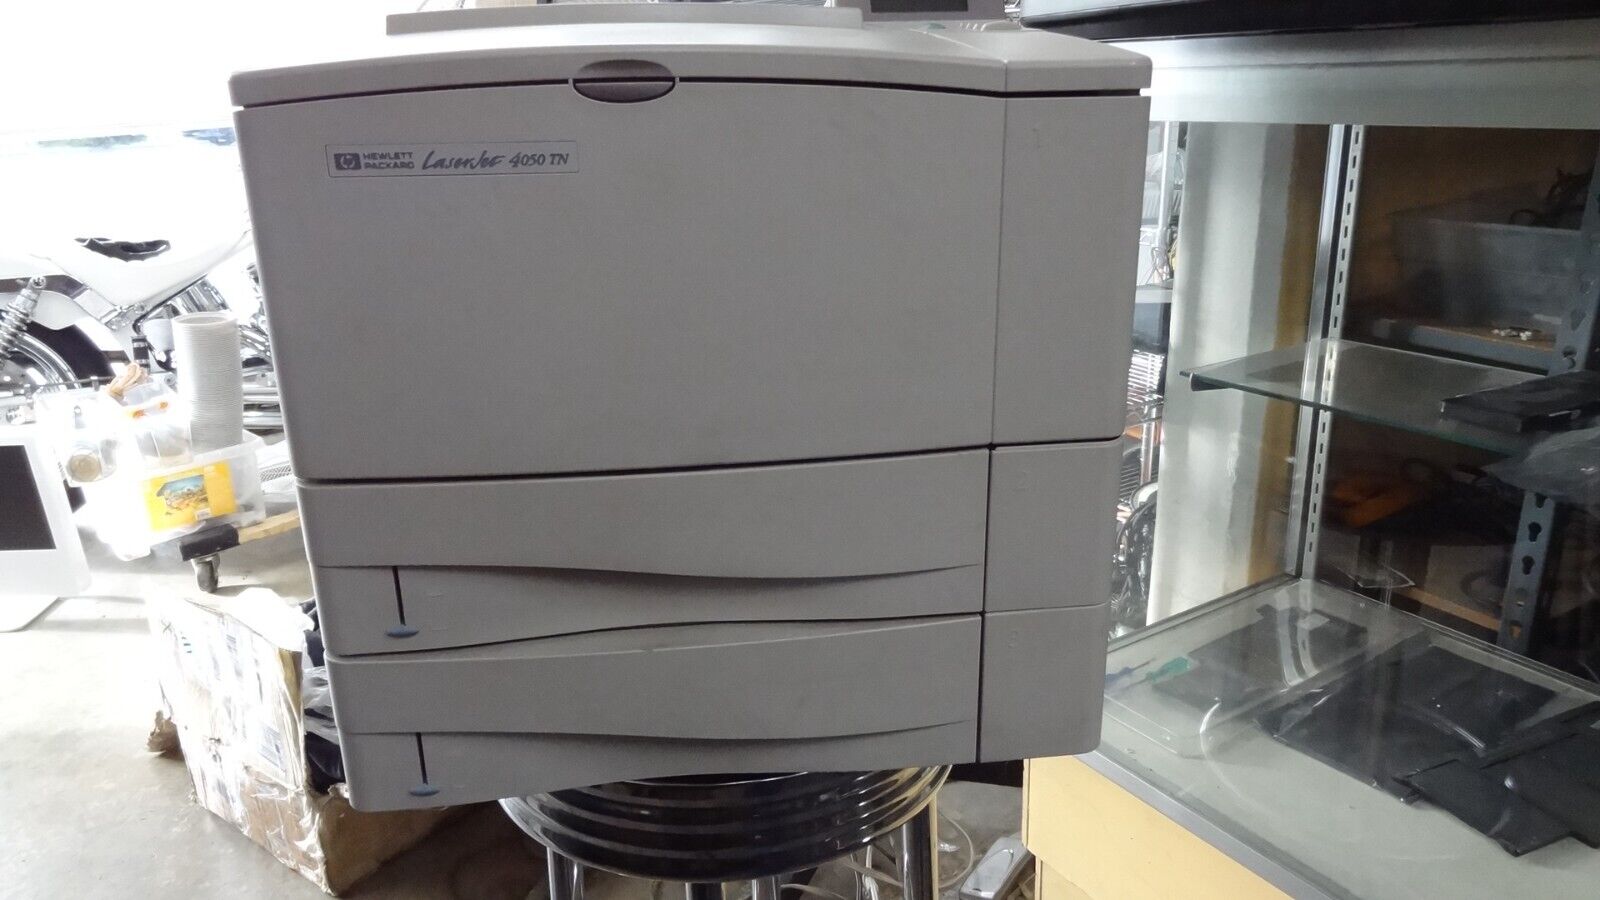 HP LaserJet 4050TN Workgroup Laser Printer - FAST PRINTS **MUST GO - WORKS GREAT